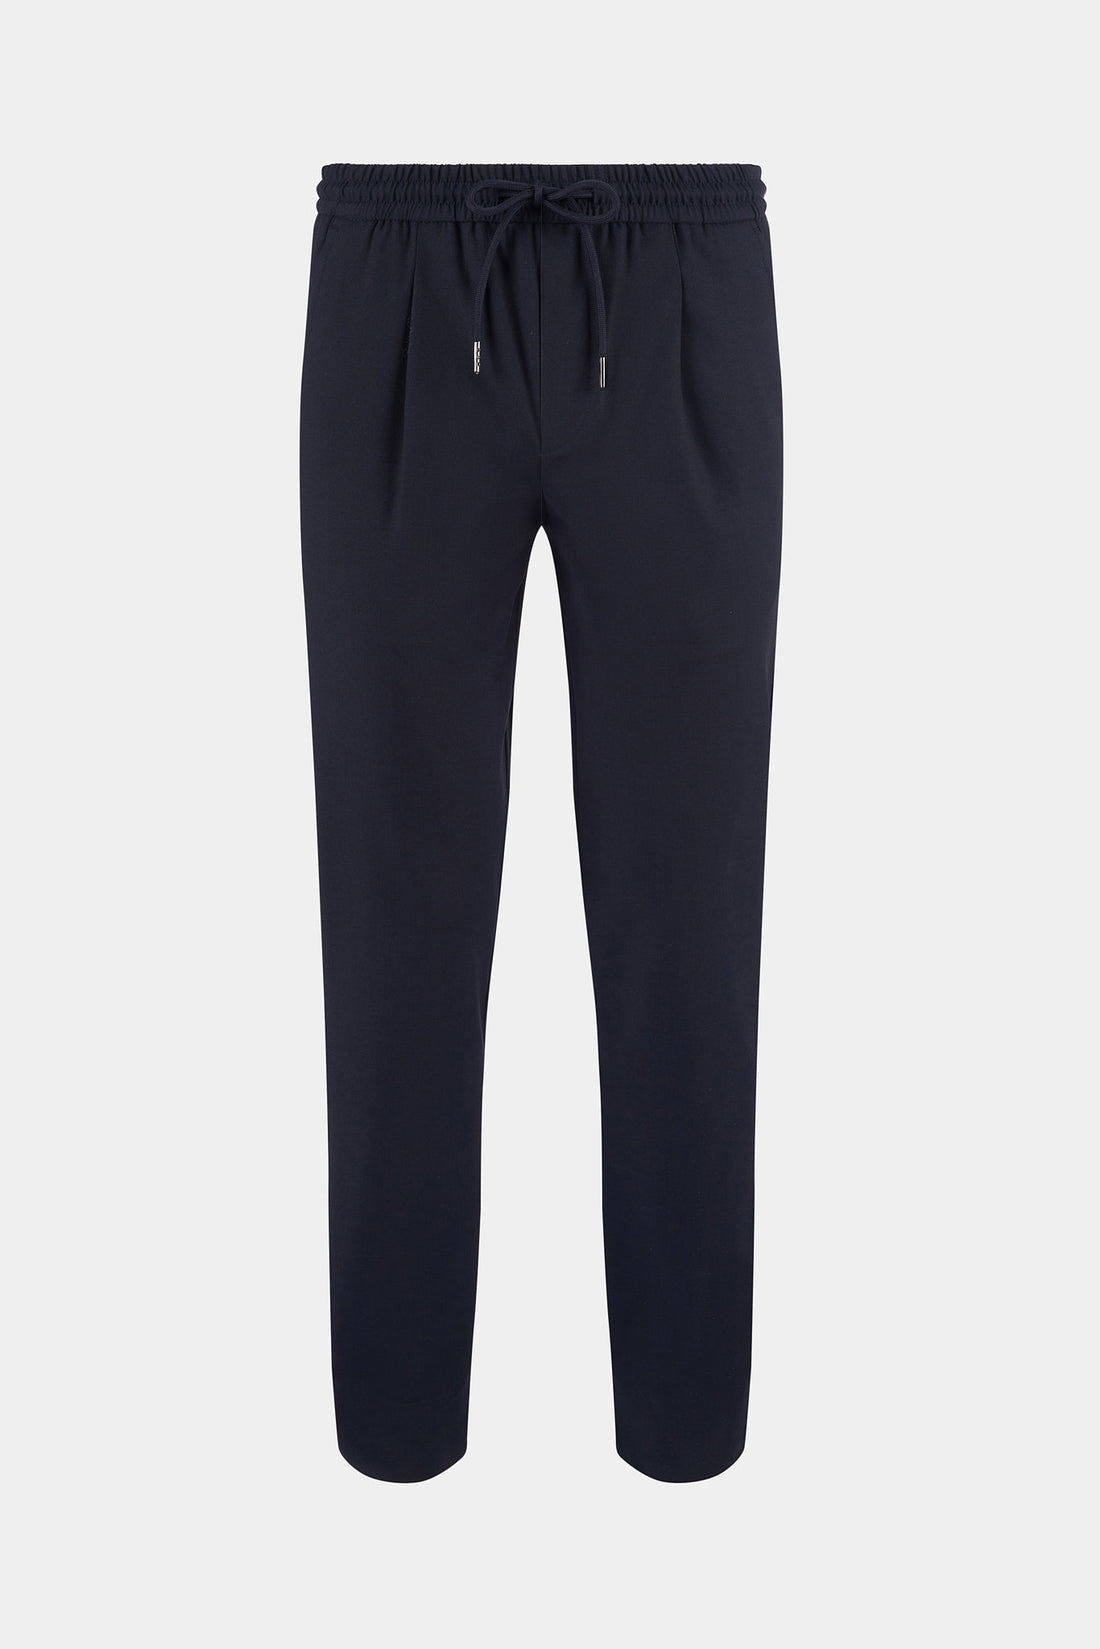 Peckham Rye Single Pleat Drawstring Trousers in Navy Blue